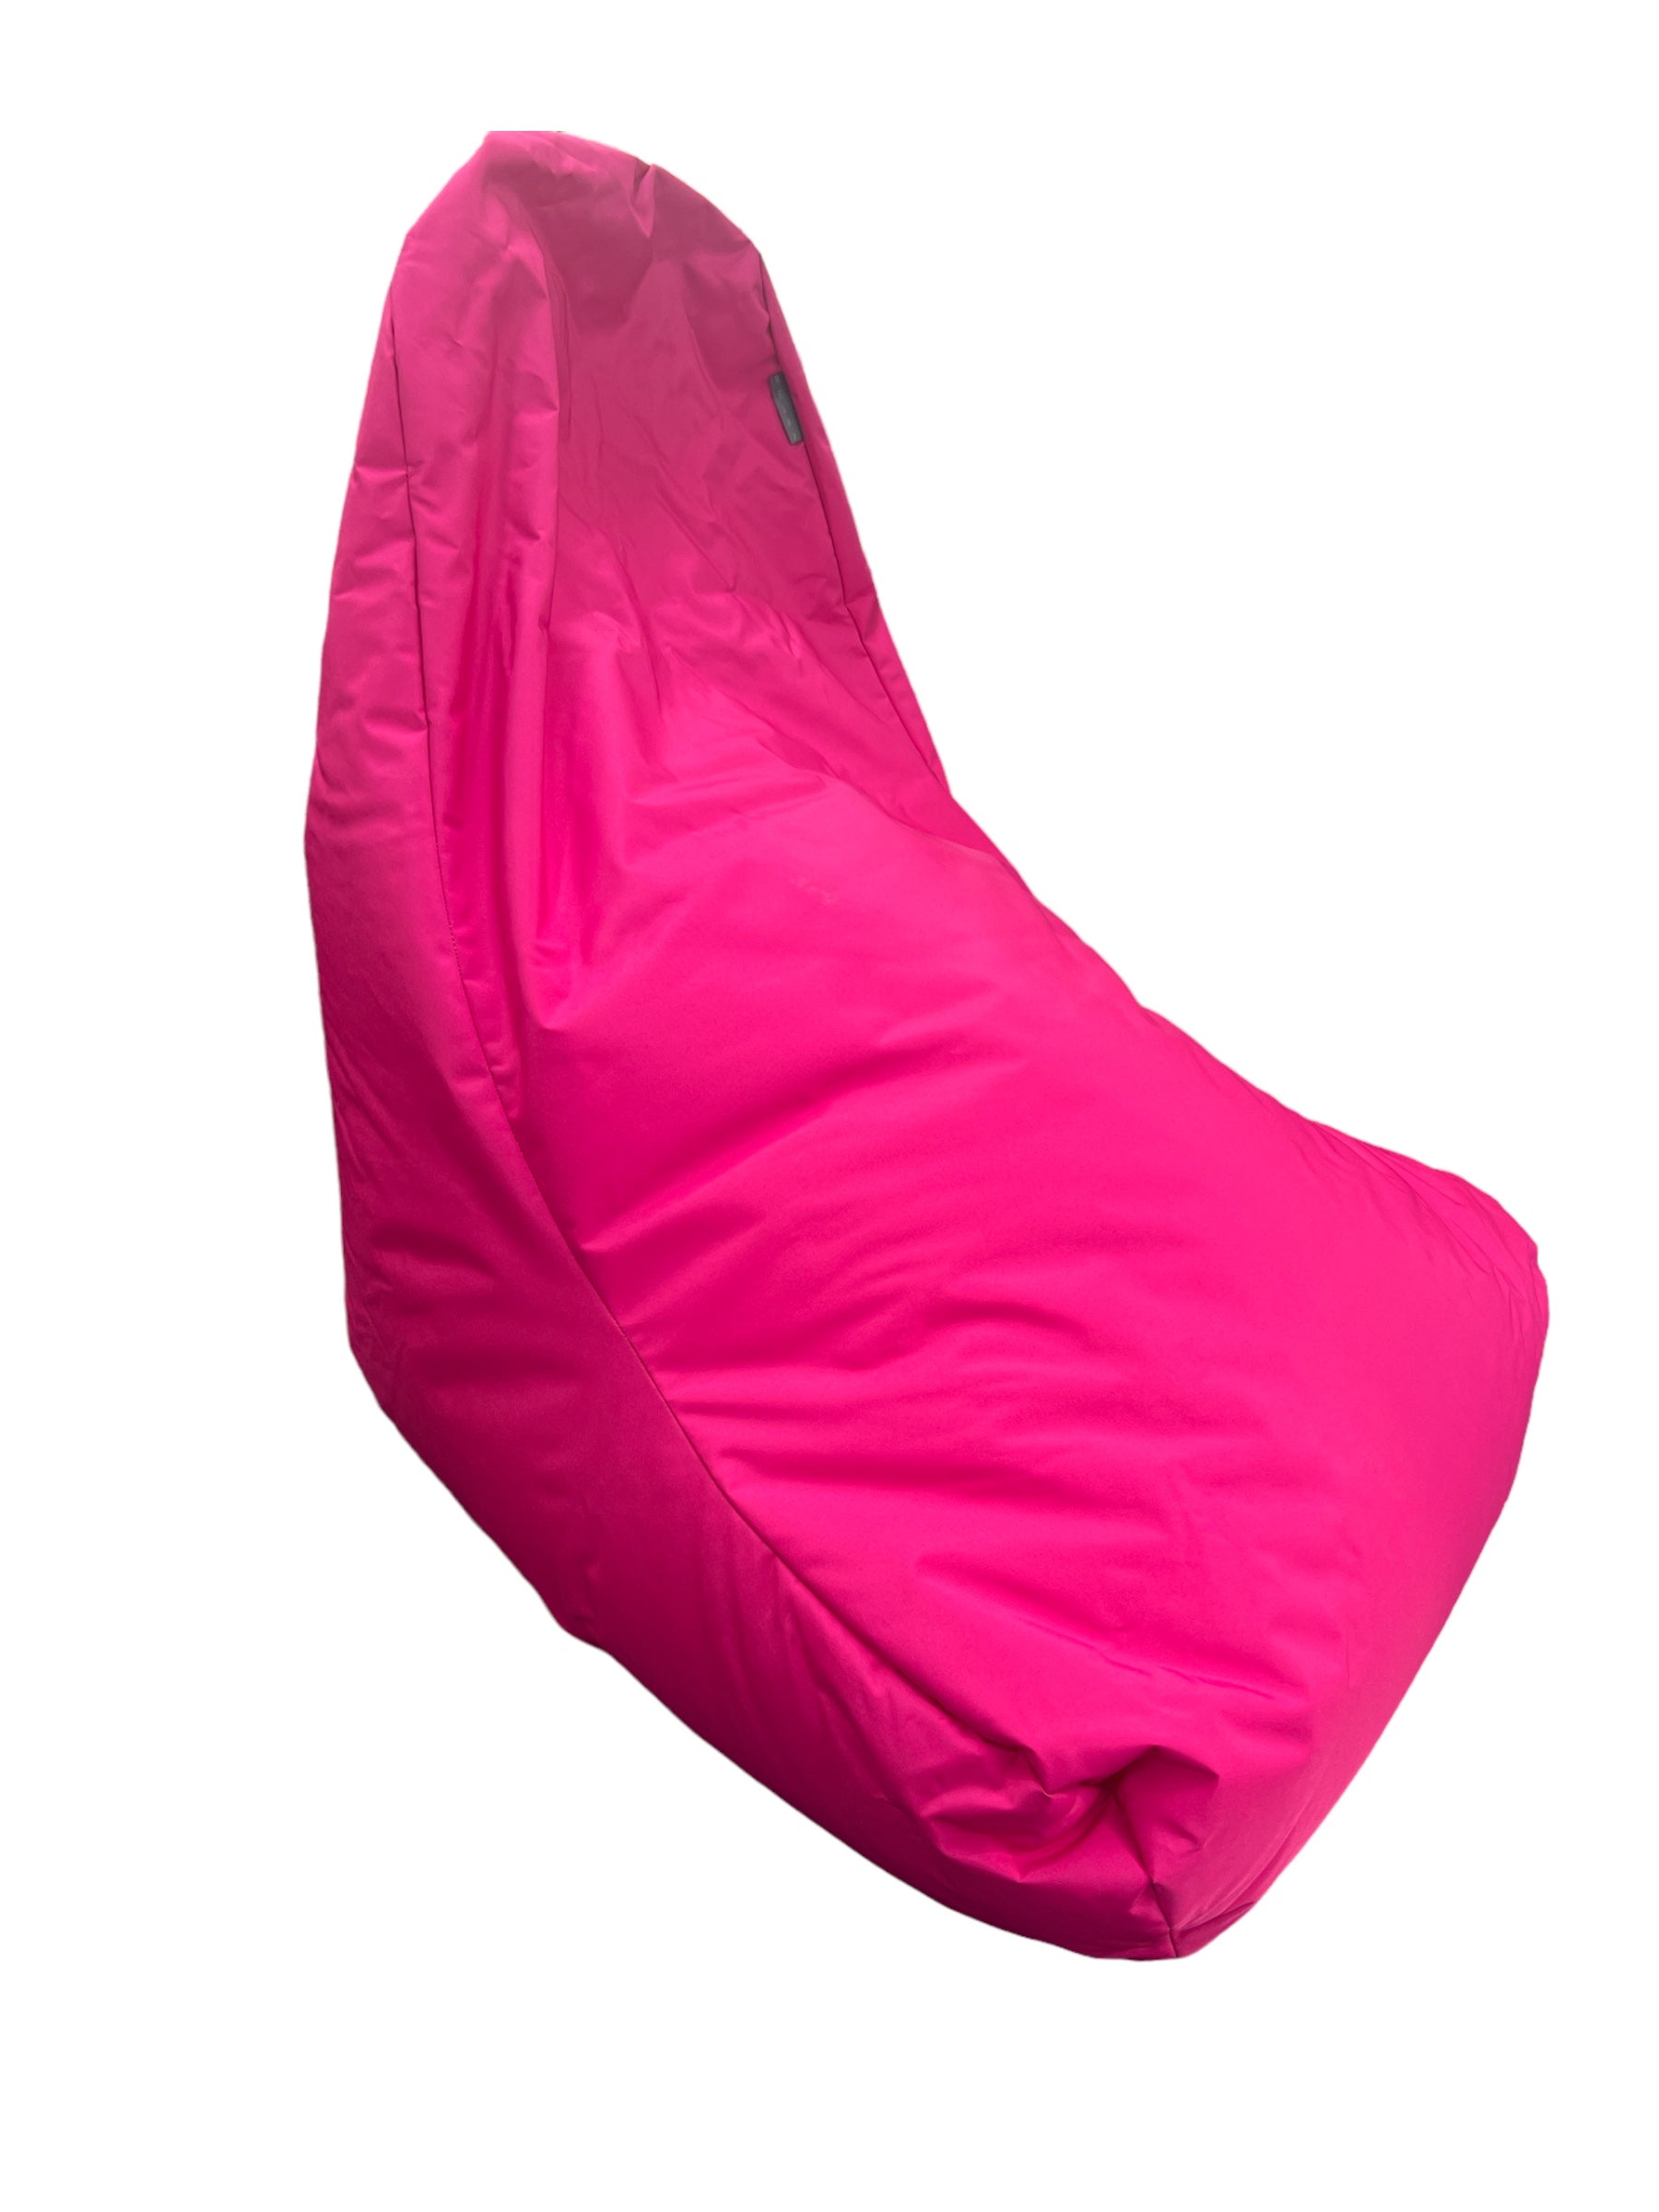 Bean bag pink